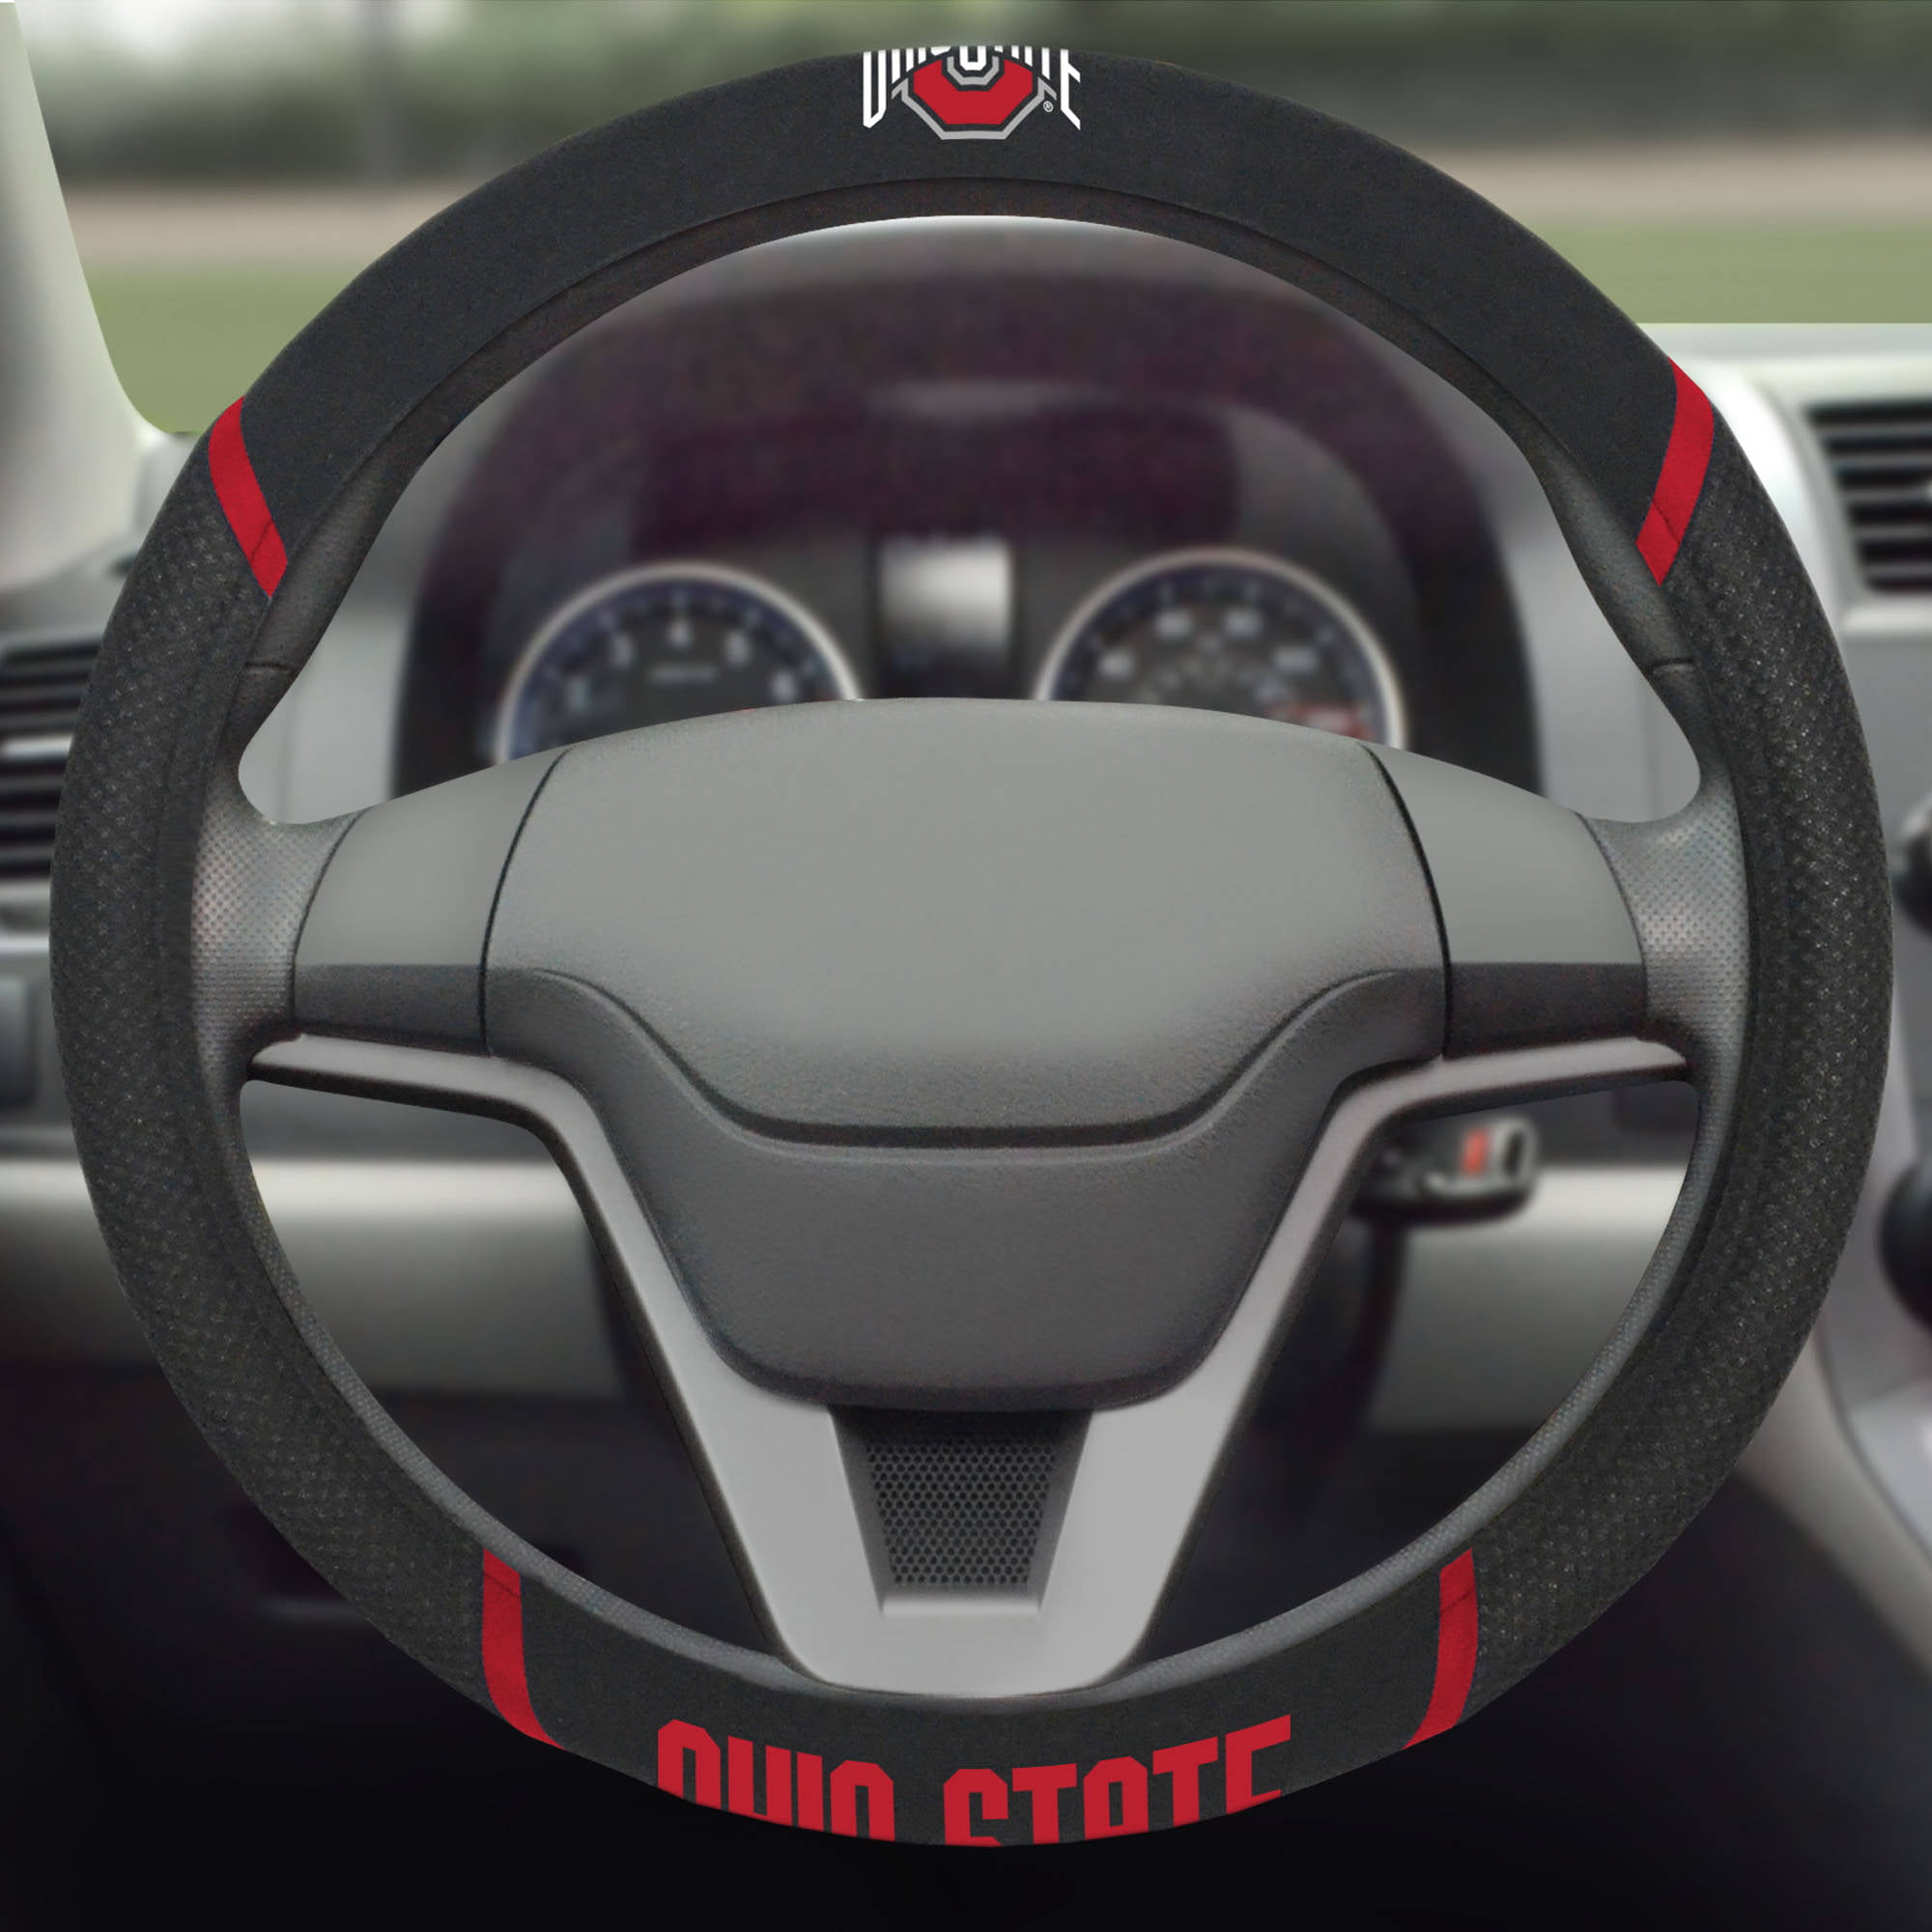 PictetW O-HIO State Football Buck-Eye Steering Wheel Cover,Car Steering Wheel Cover for Women and Men,Neoprene Universal 15 Inch Anti-Slip-Breathable-Durable